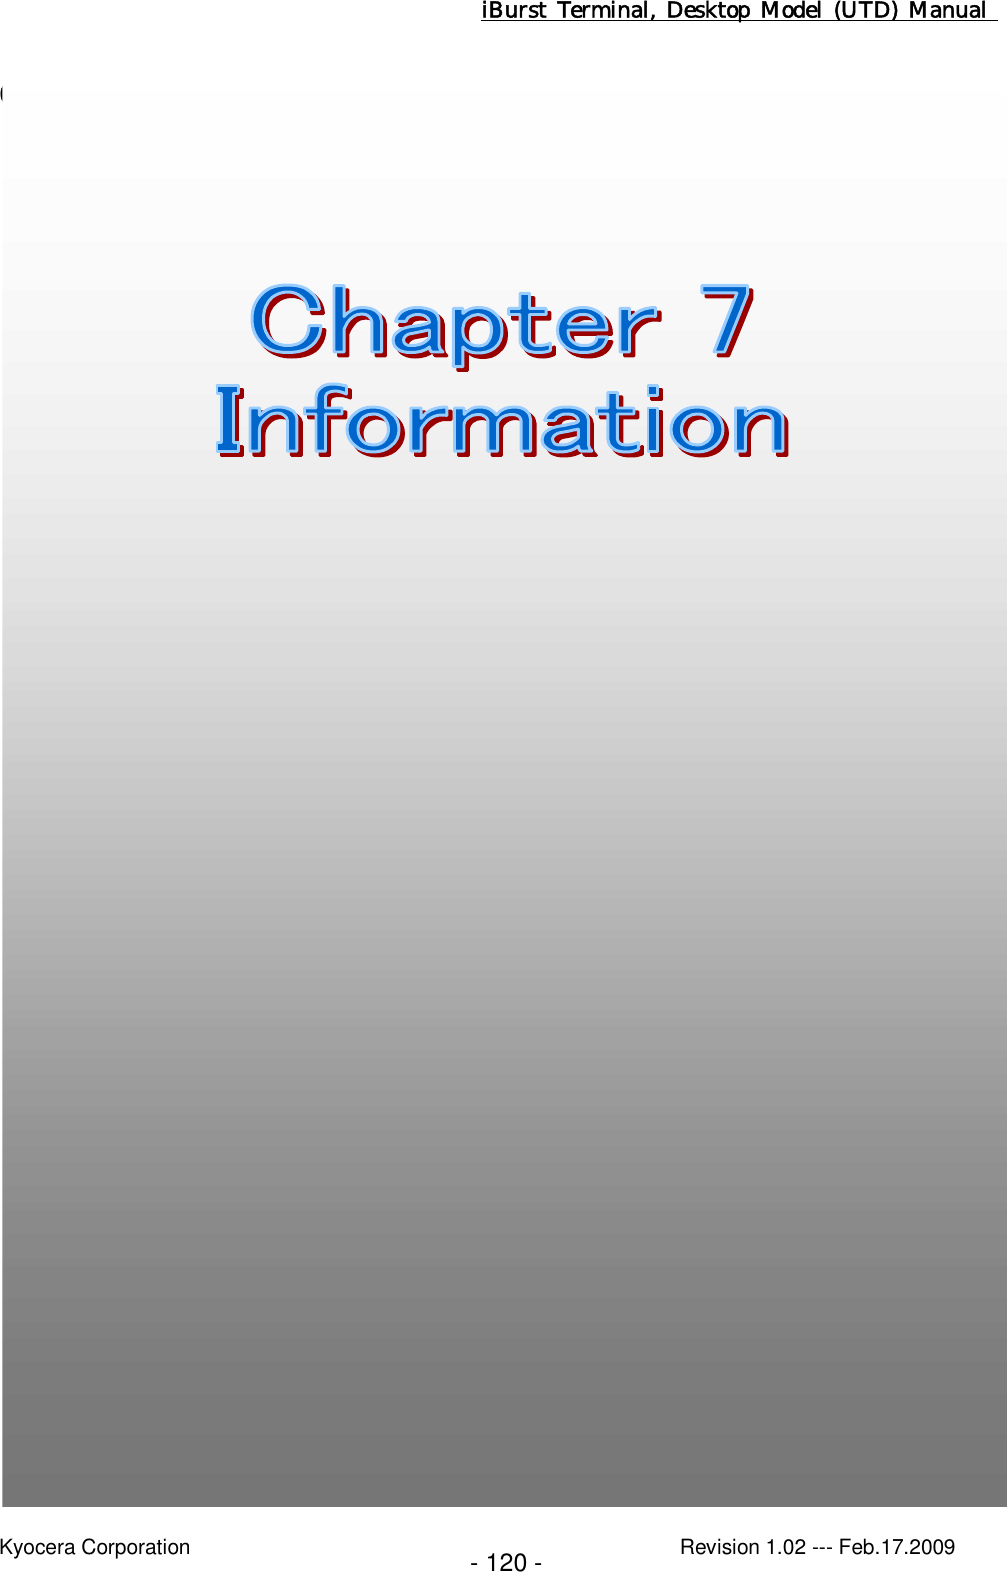 iBurst  Terminal, Desktop  Model  (UTD)  Manual    Kyocera Corporation                                                                                              Revision 1.02 --- Feb.17.2009 - 120 - Chapter 7 Information  